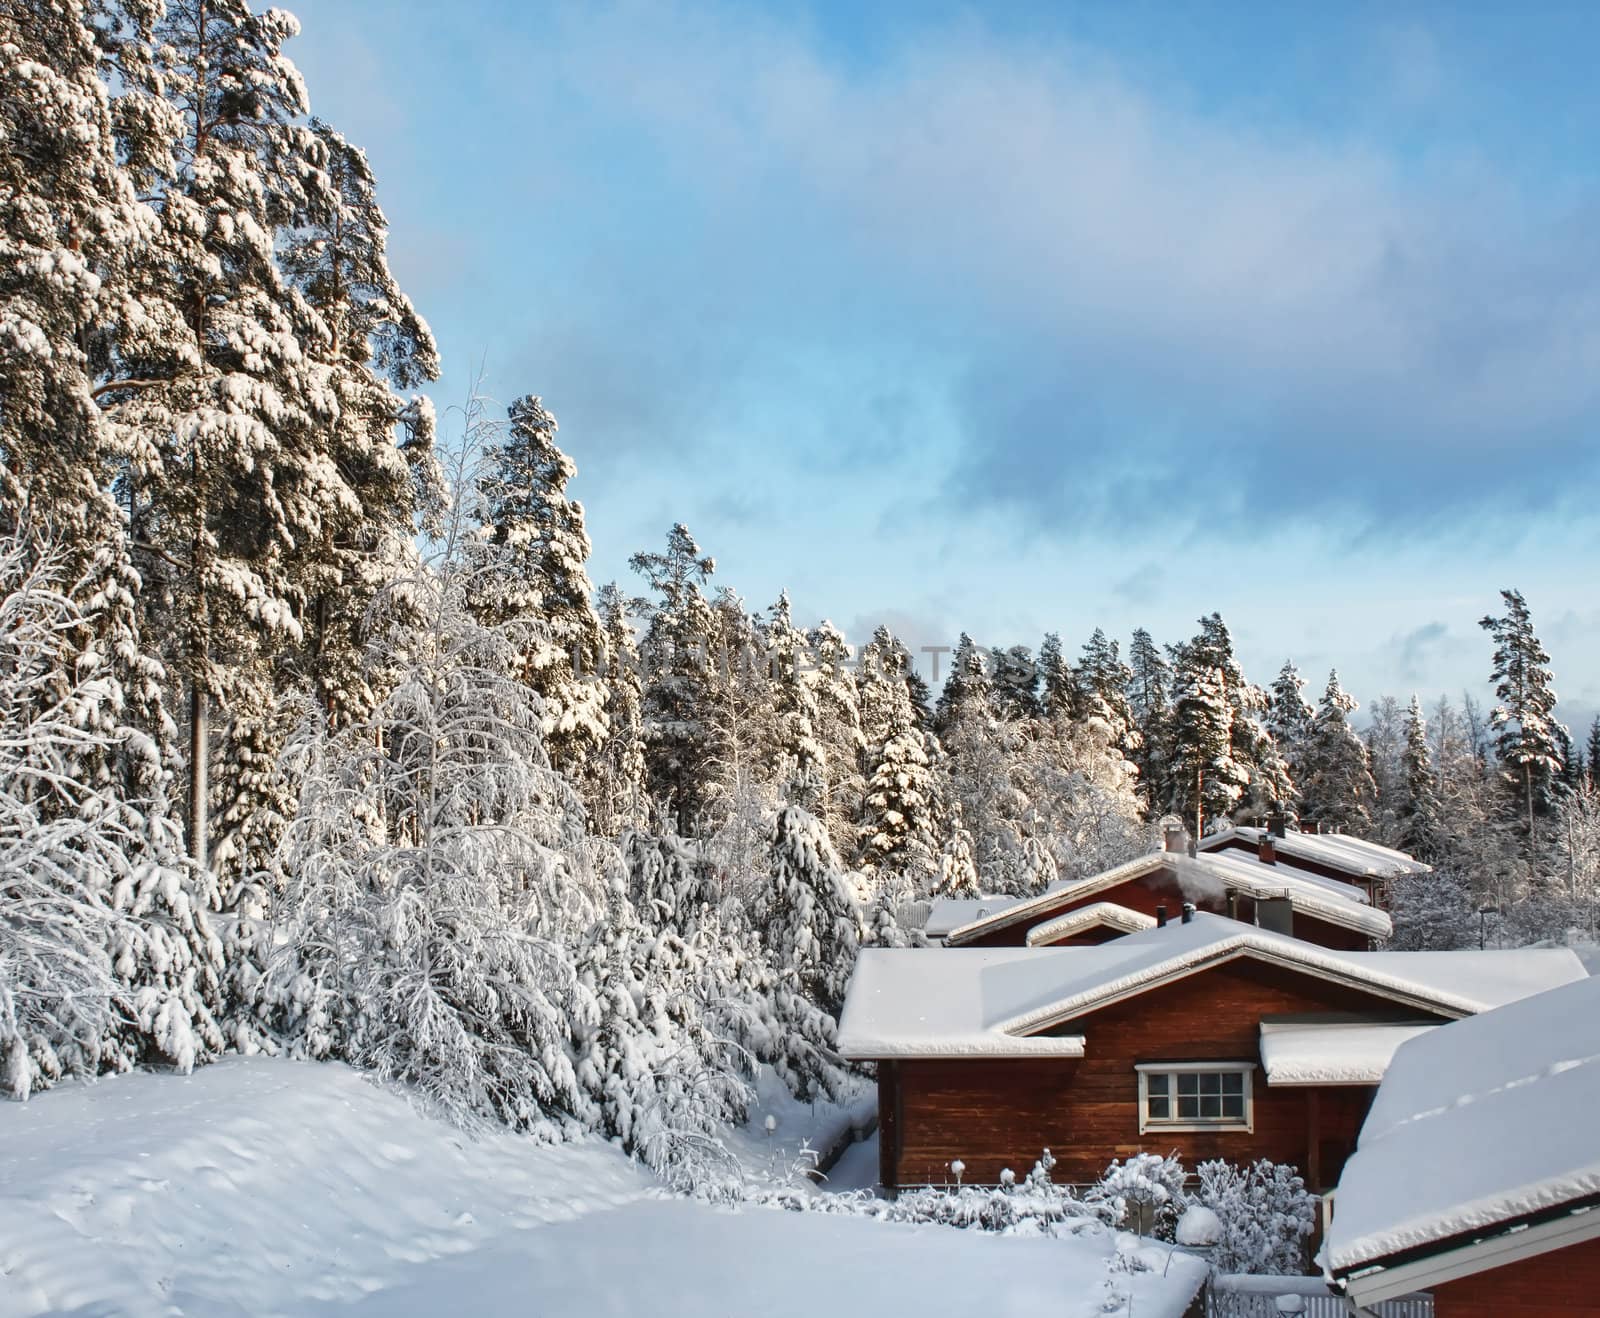 Log houses in snowy winter scenery by anterovium